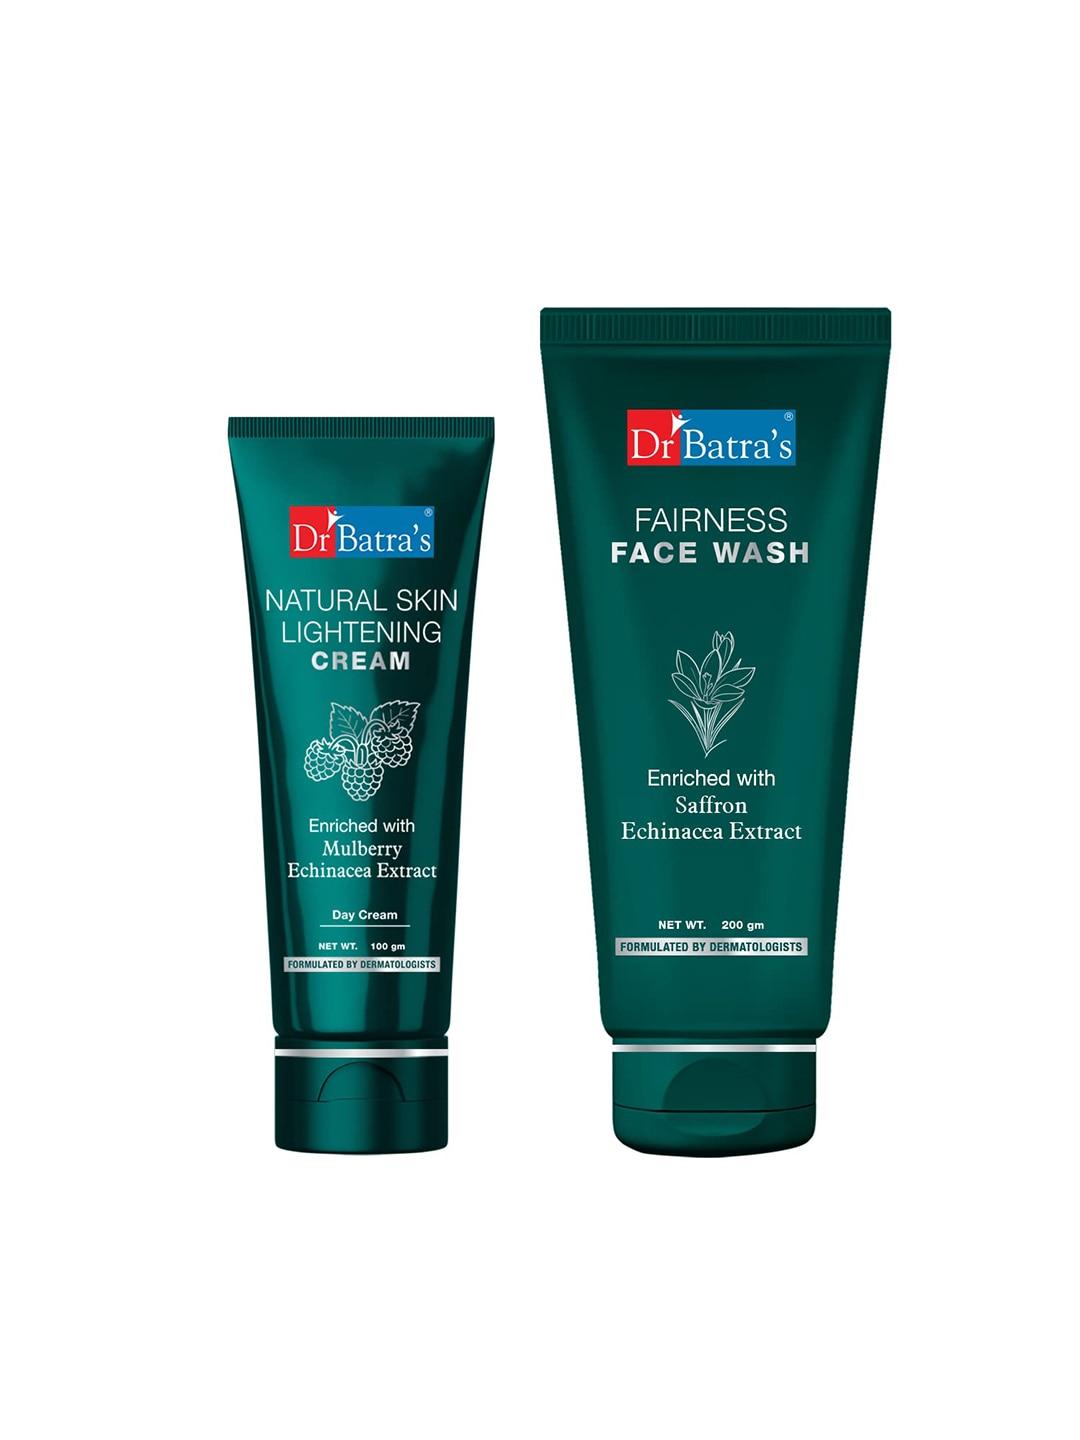 Dr. Batras Natural Skin Lightening Cream 100 g & Fairness Face Wash 200 g